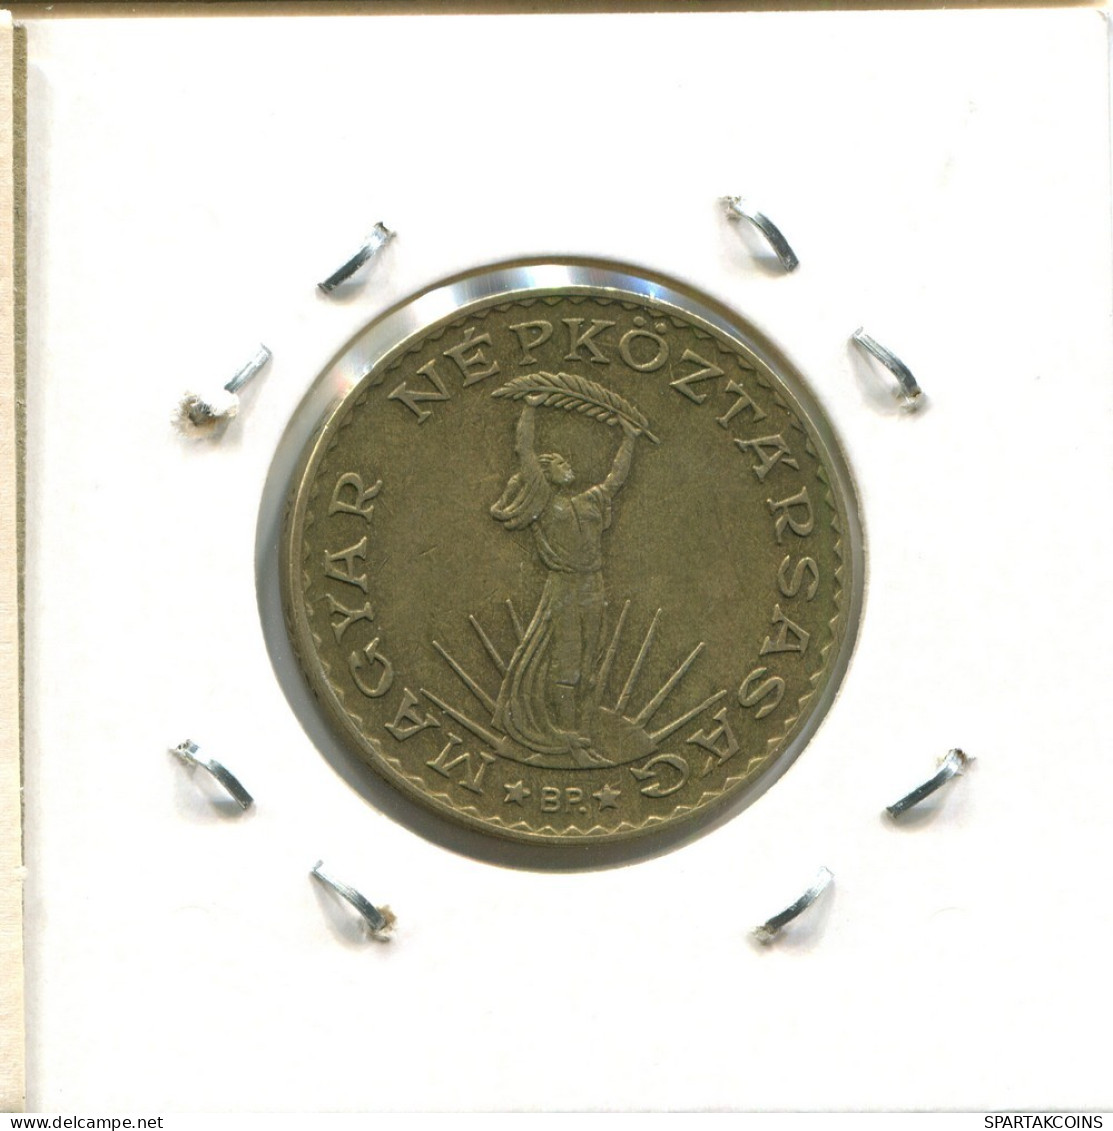 10 FORINT 1984 HUNGRÍA HUNGARY Moneda #AS873.E.A - Hongarije